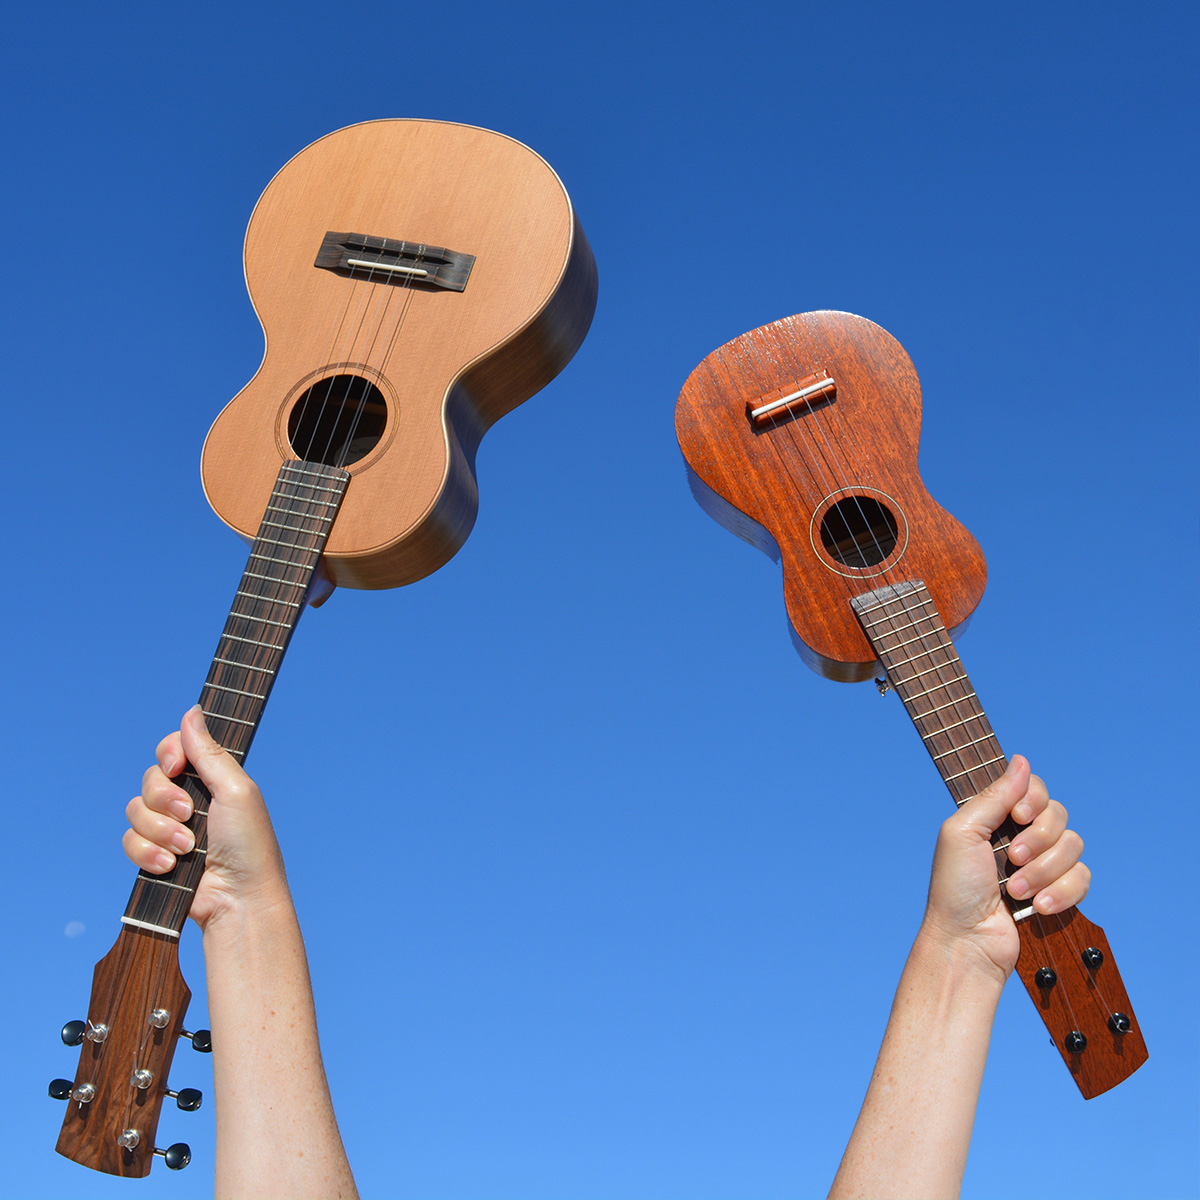 Two ukuleles held aloft